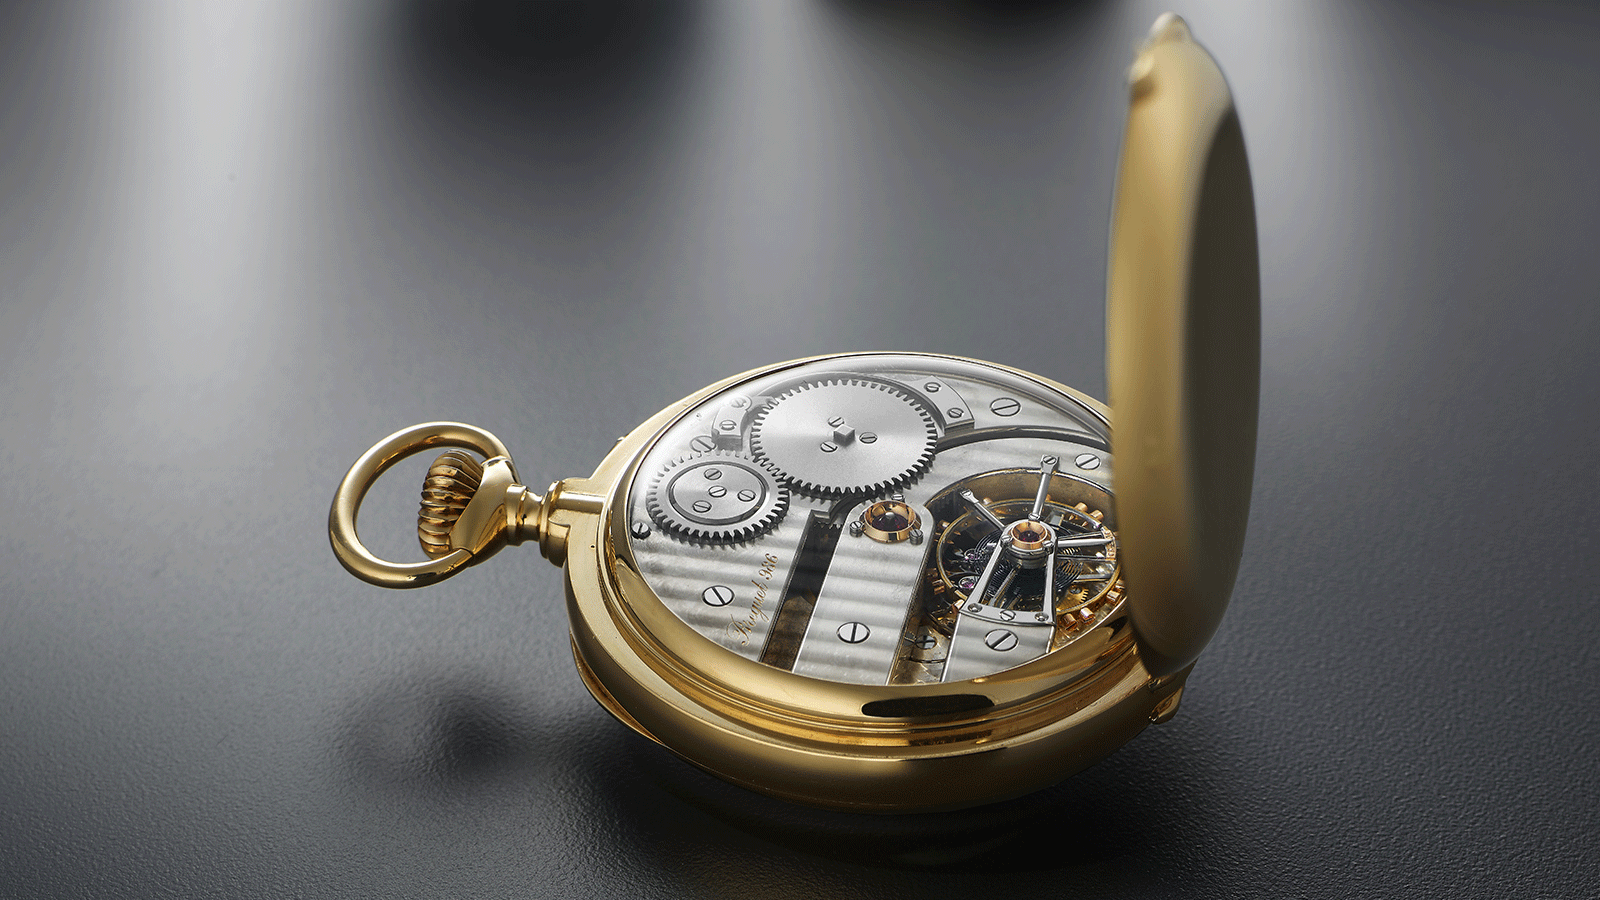 Breguet No. 986, Tourbillon timepiece sold in 1926 to Mr Louis-Harrison Dulles